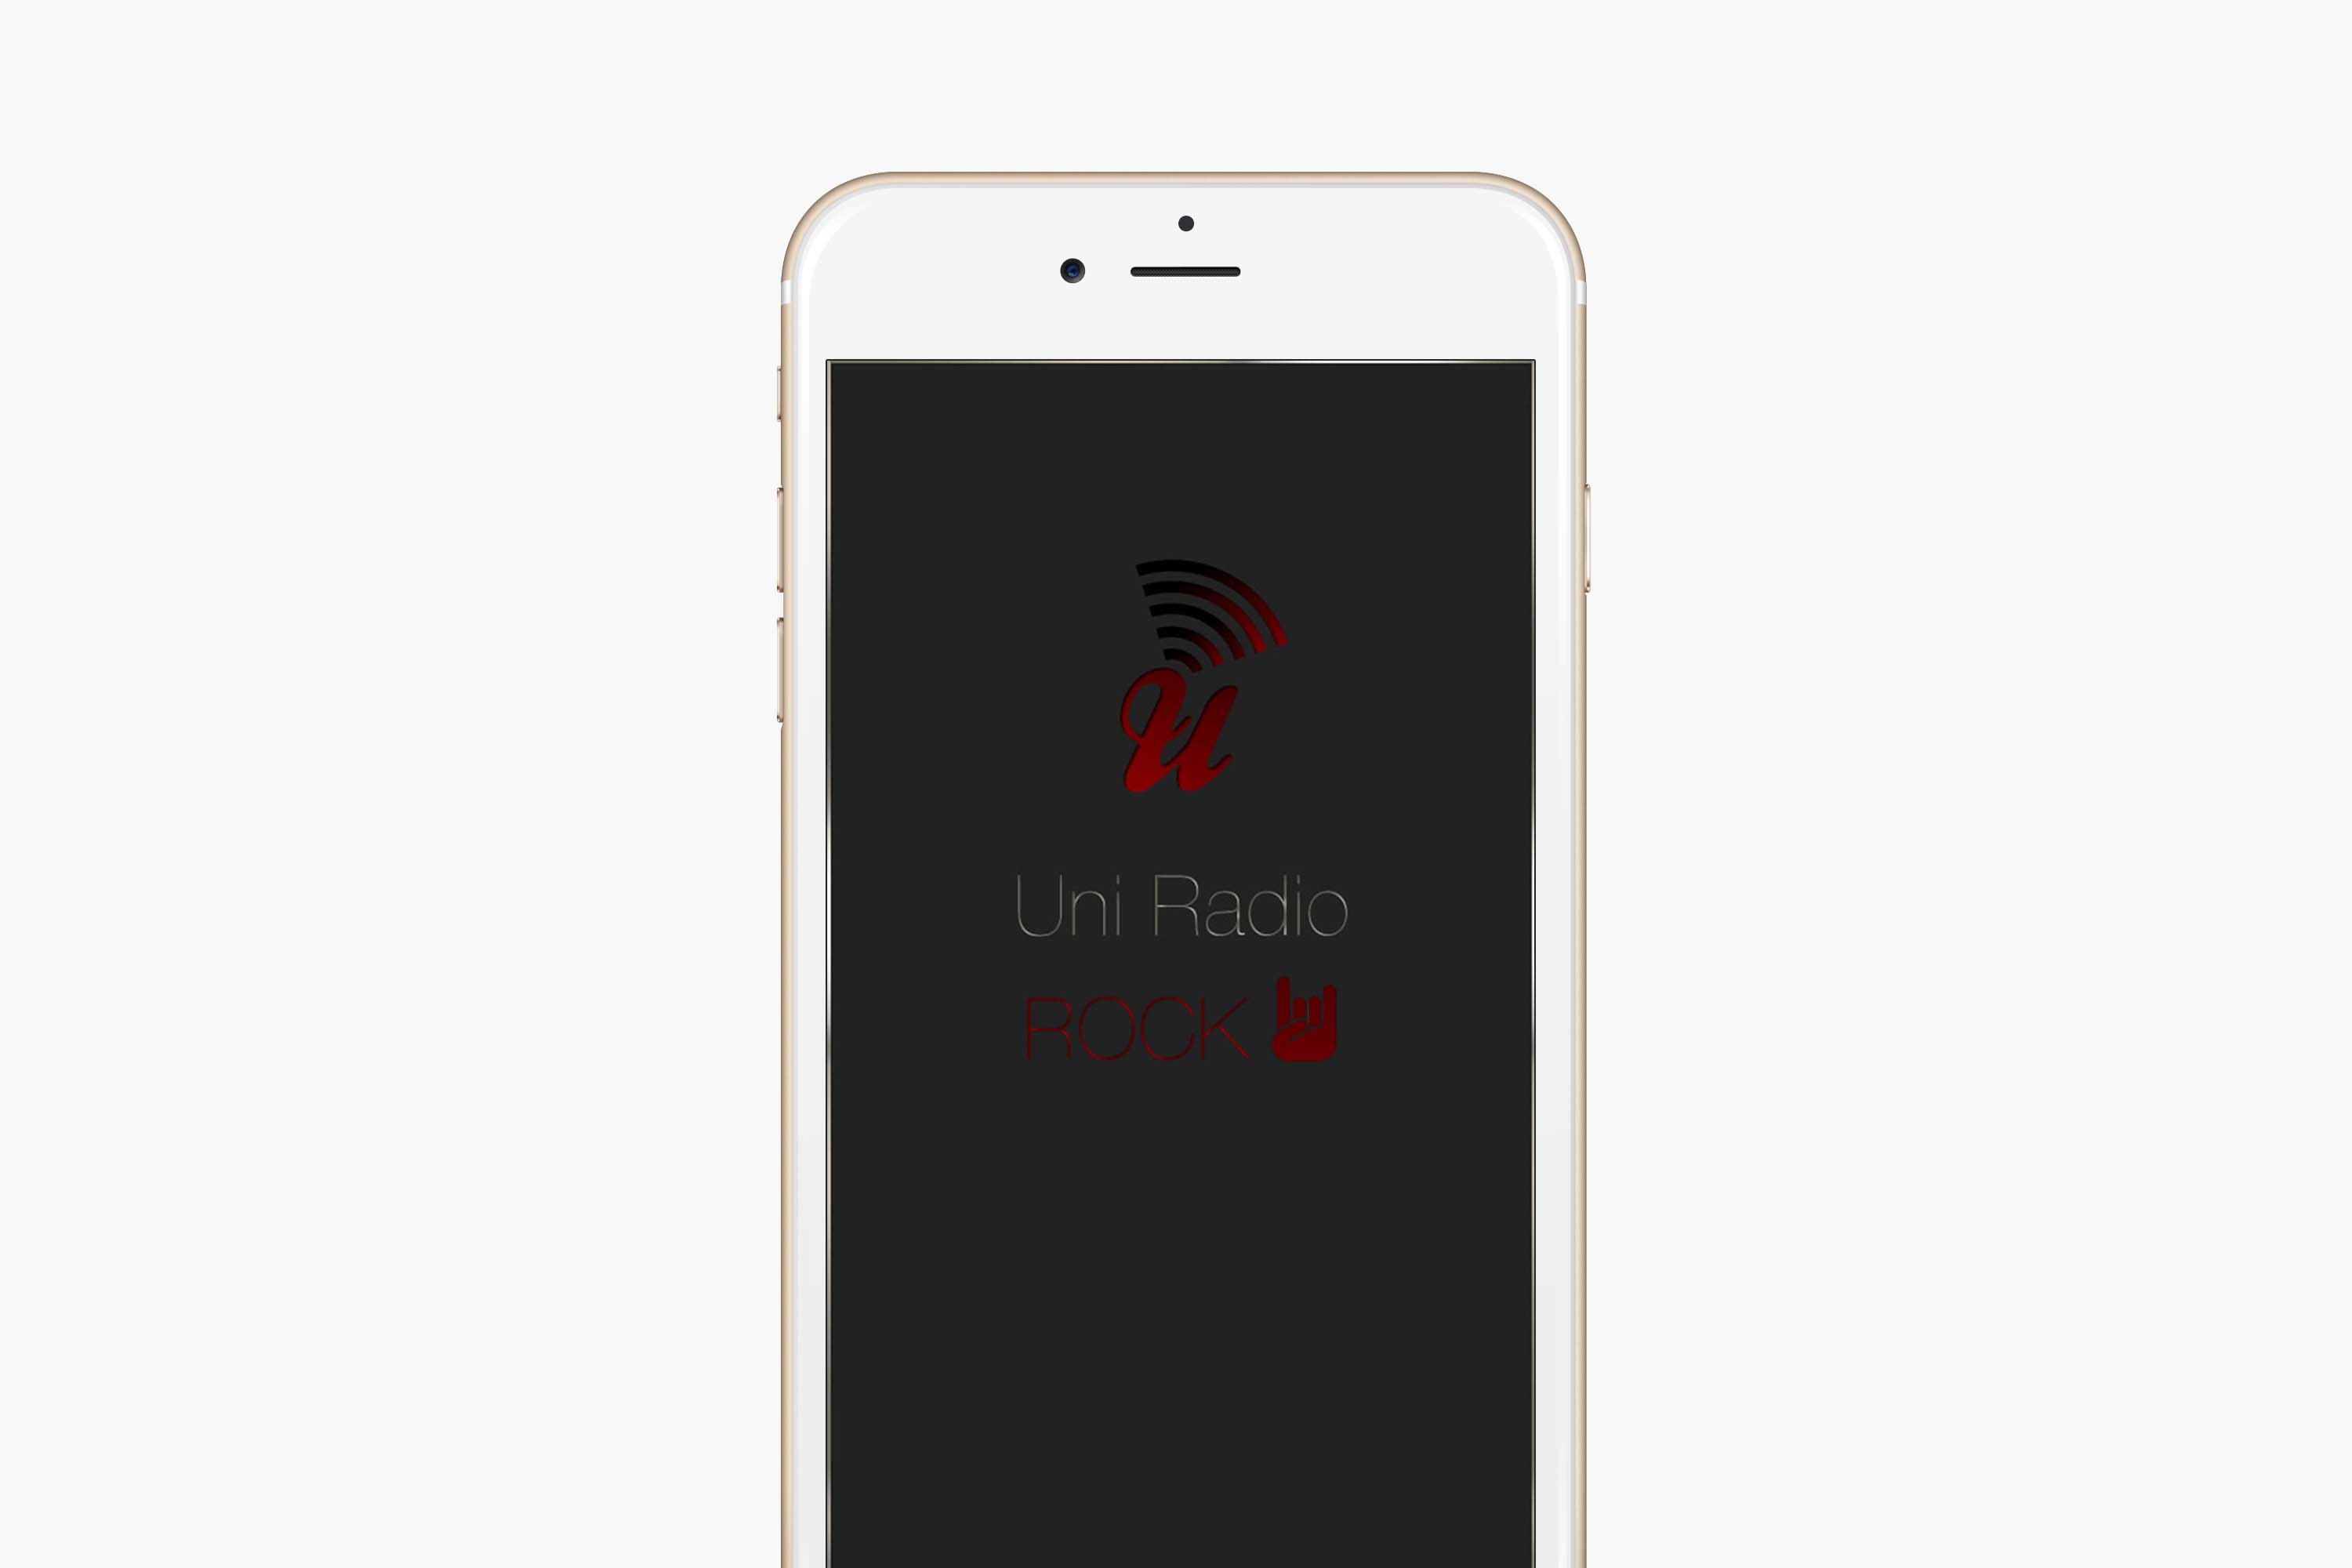 Uniradio app IOS